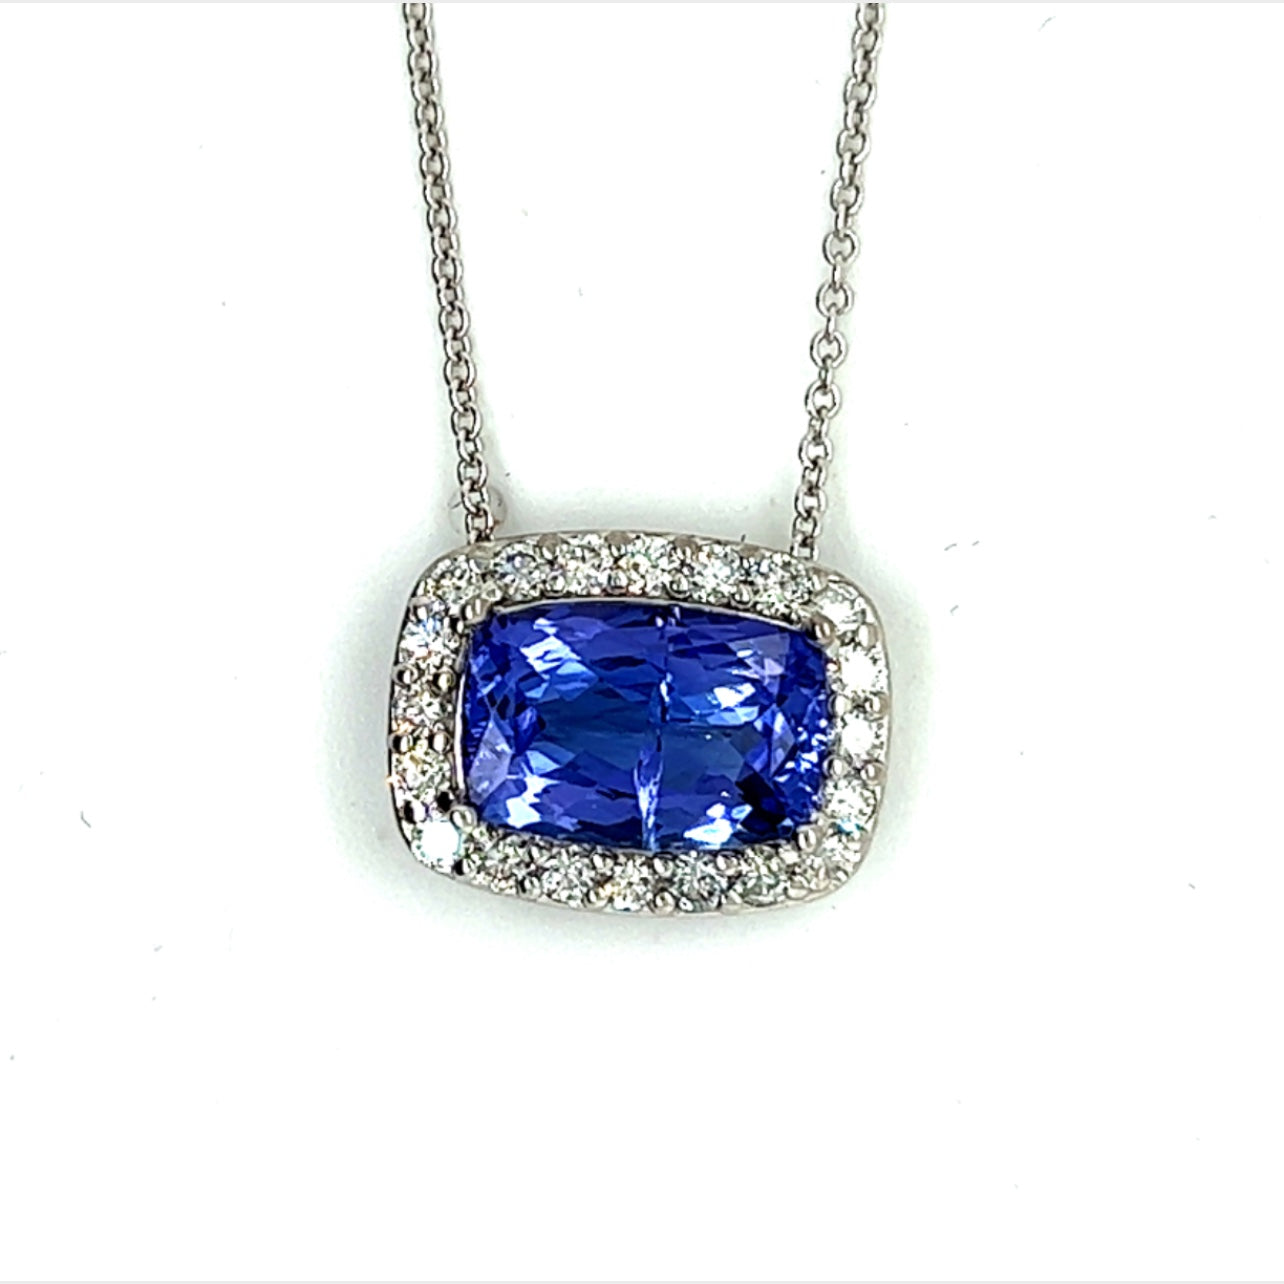 Natural Tanzanite Diamond Pendant Necklace 18" 14k W Gold 4.85 TCW Certified $5,975 215434 - Certified Fine Jewelry